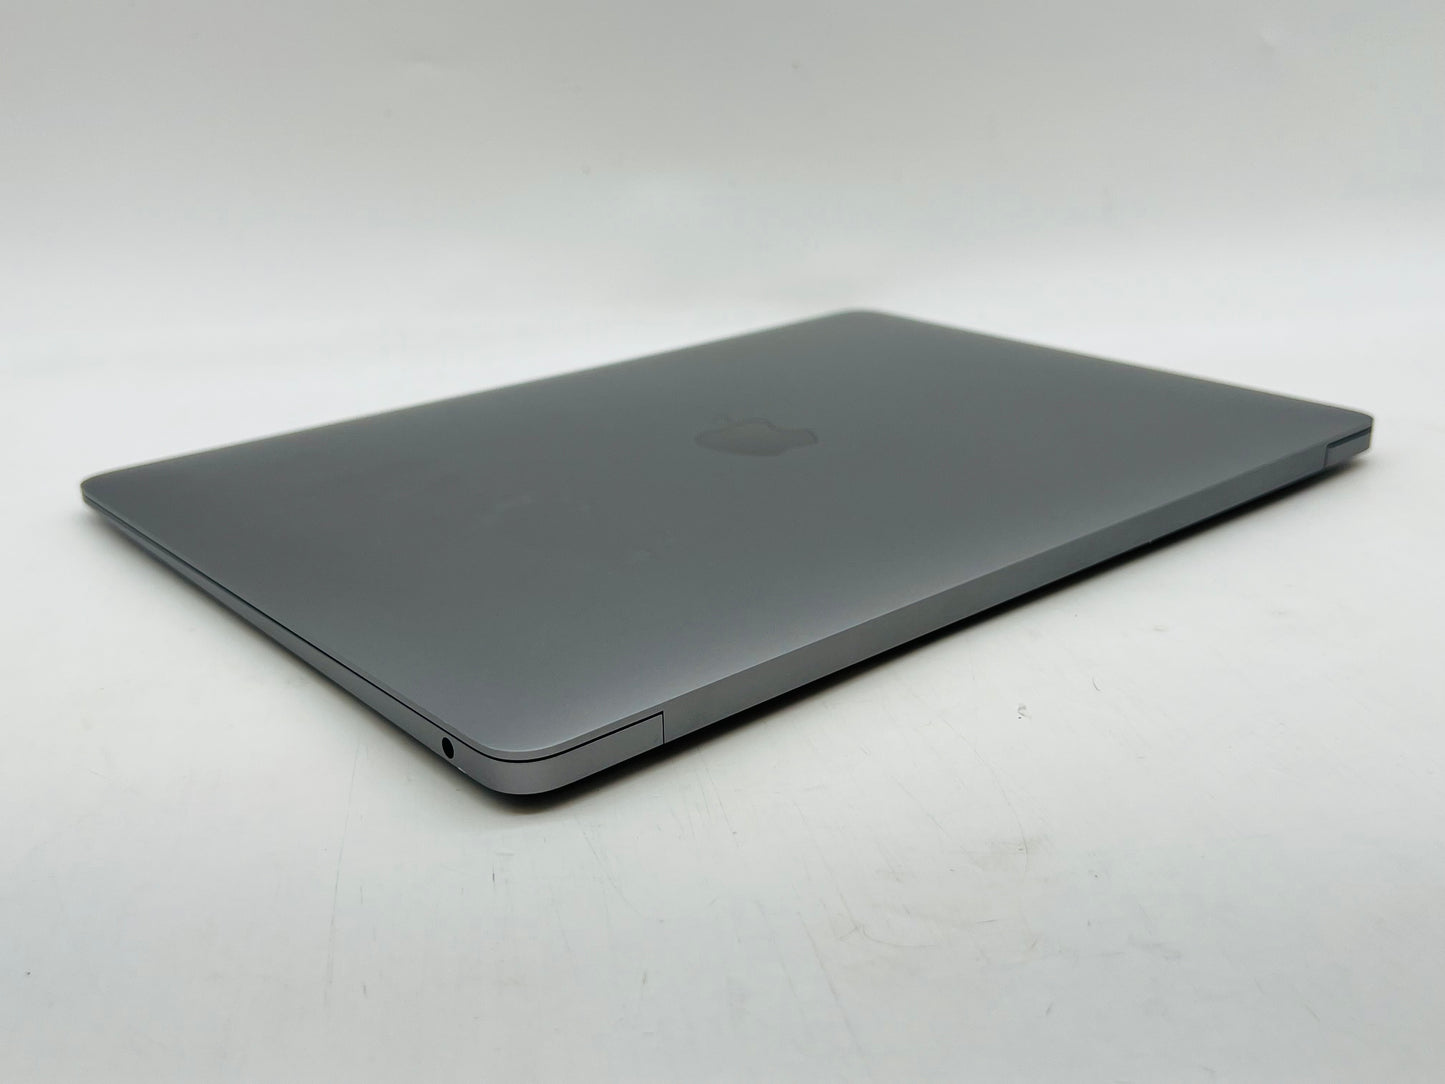 Apple 2020 MacBook Air M1 3.2GHz (7-Core GPU) 16GB RAM 256GB SSD AC+ - Very good